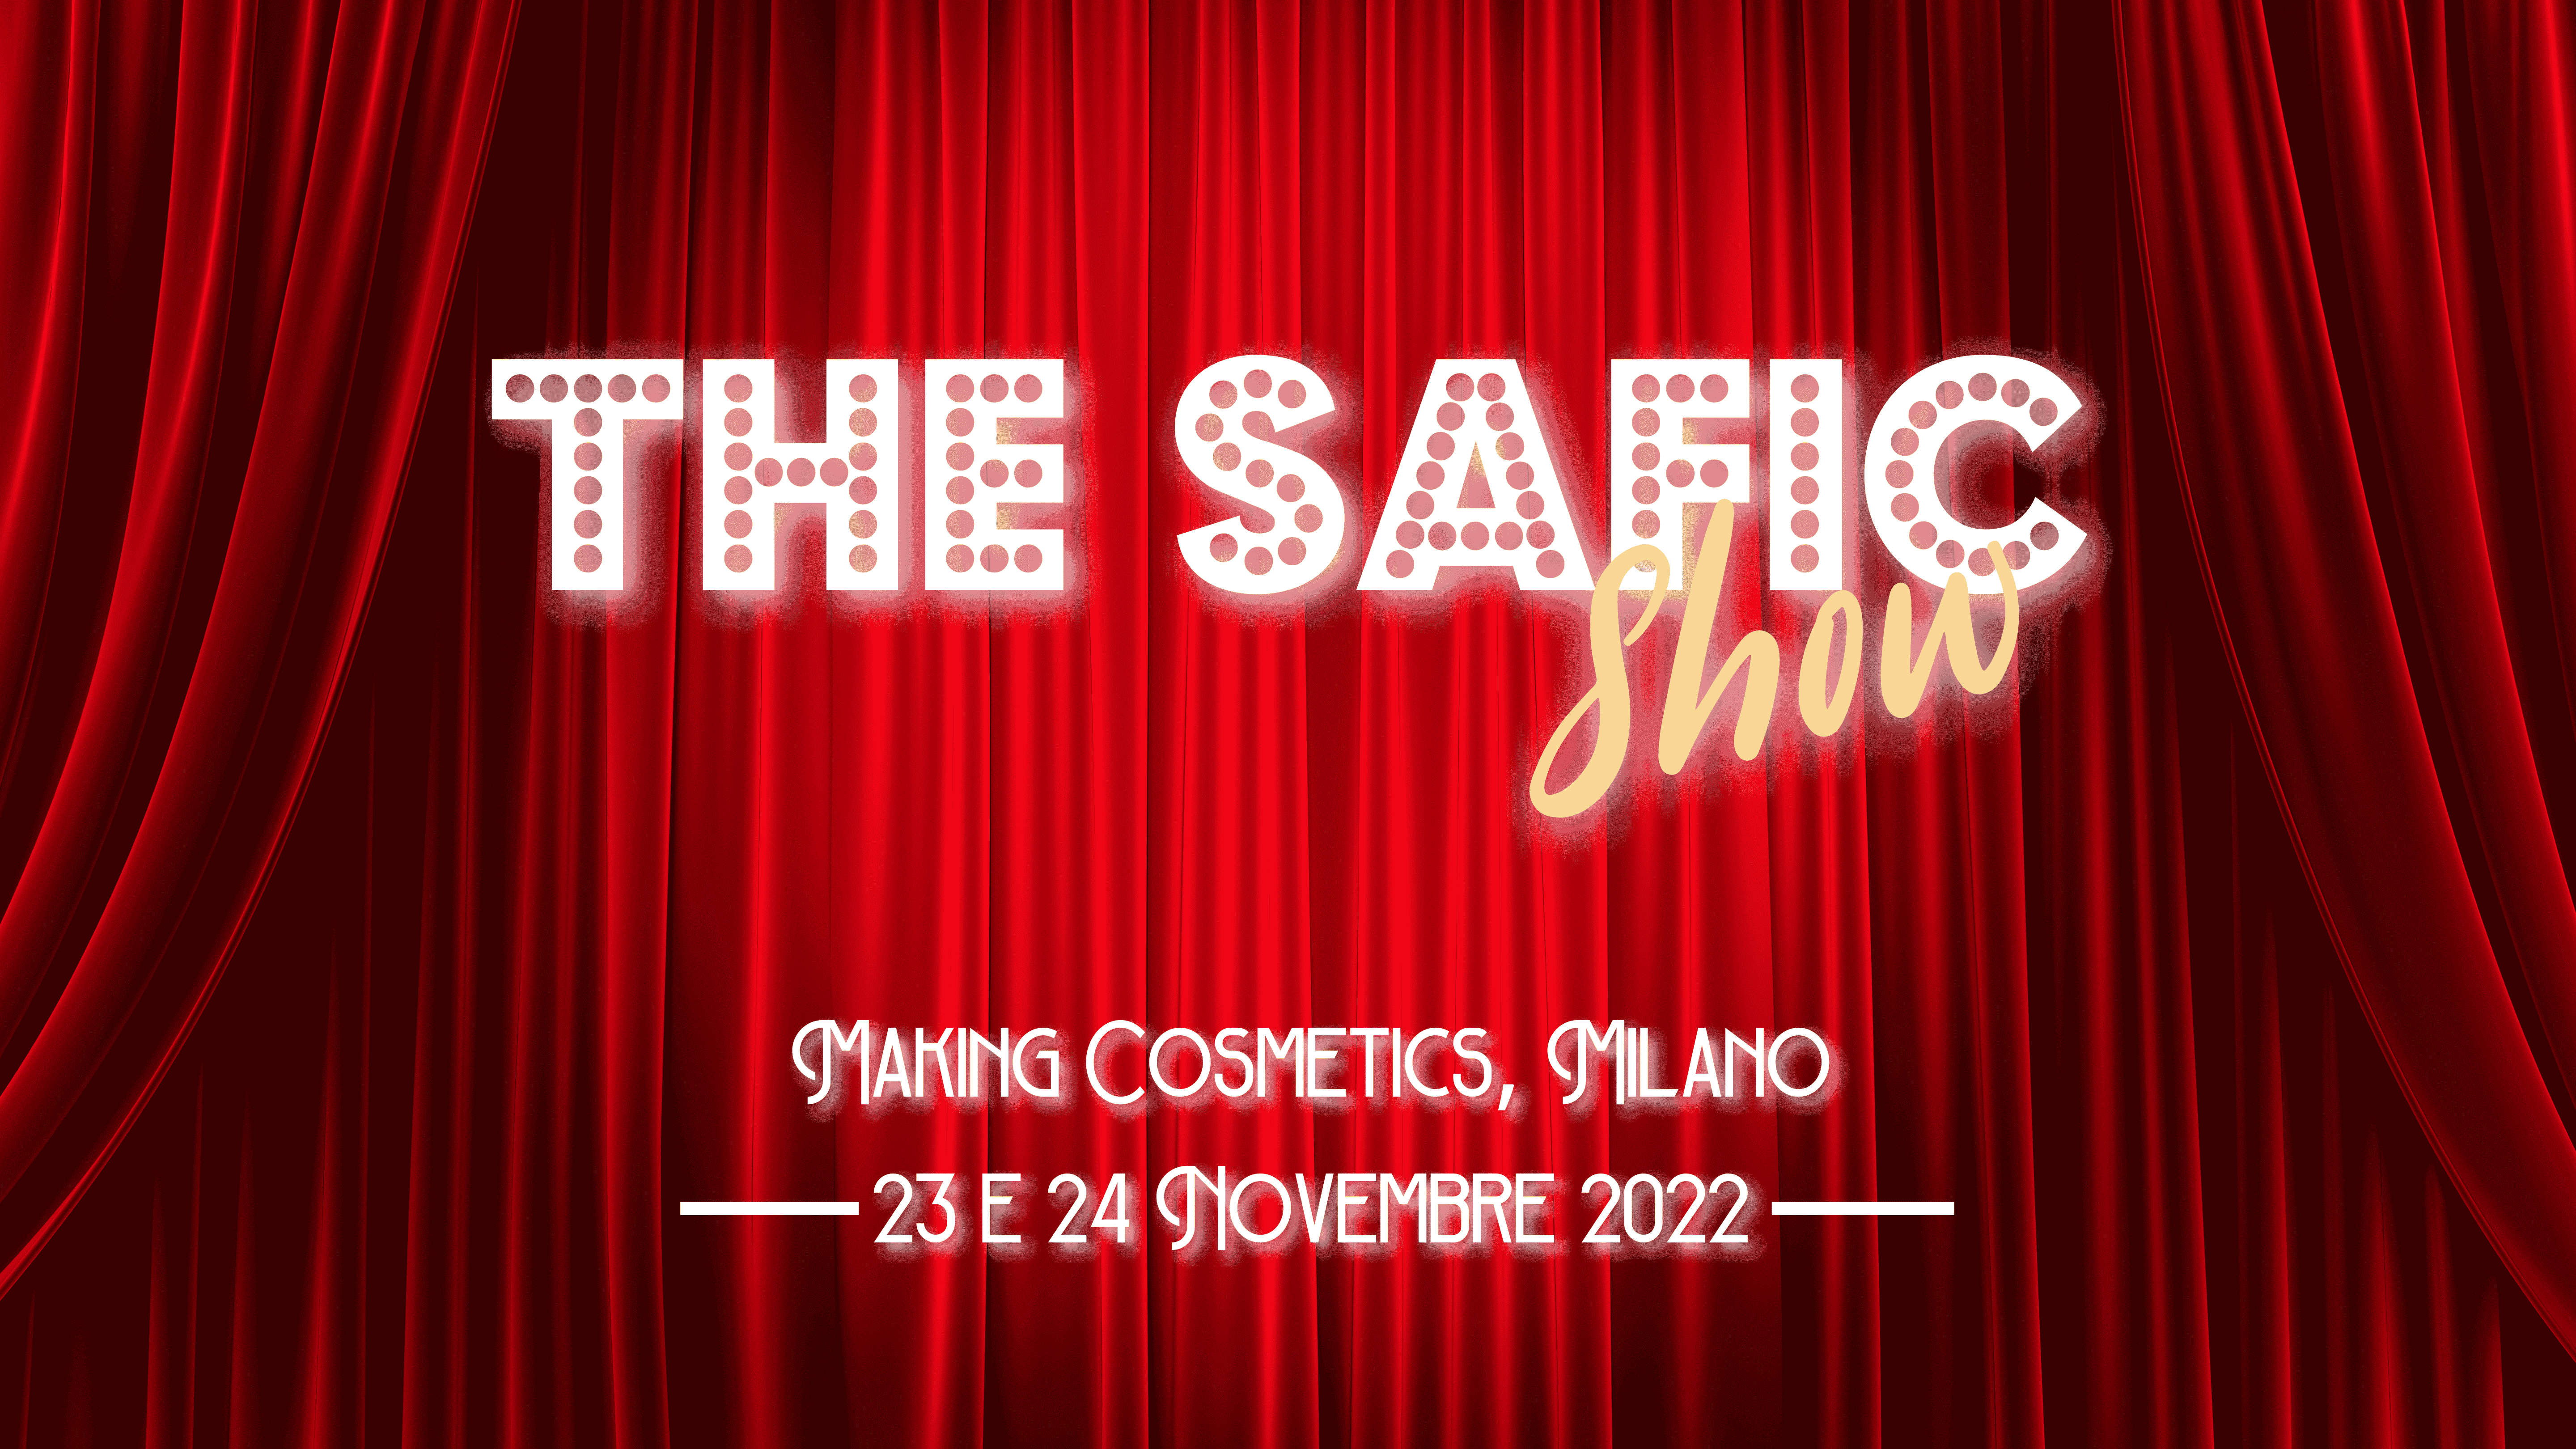 Let's start the SAFIC show!